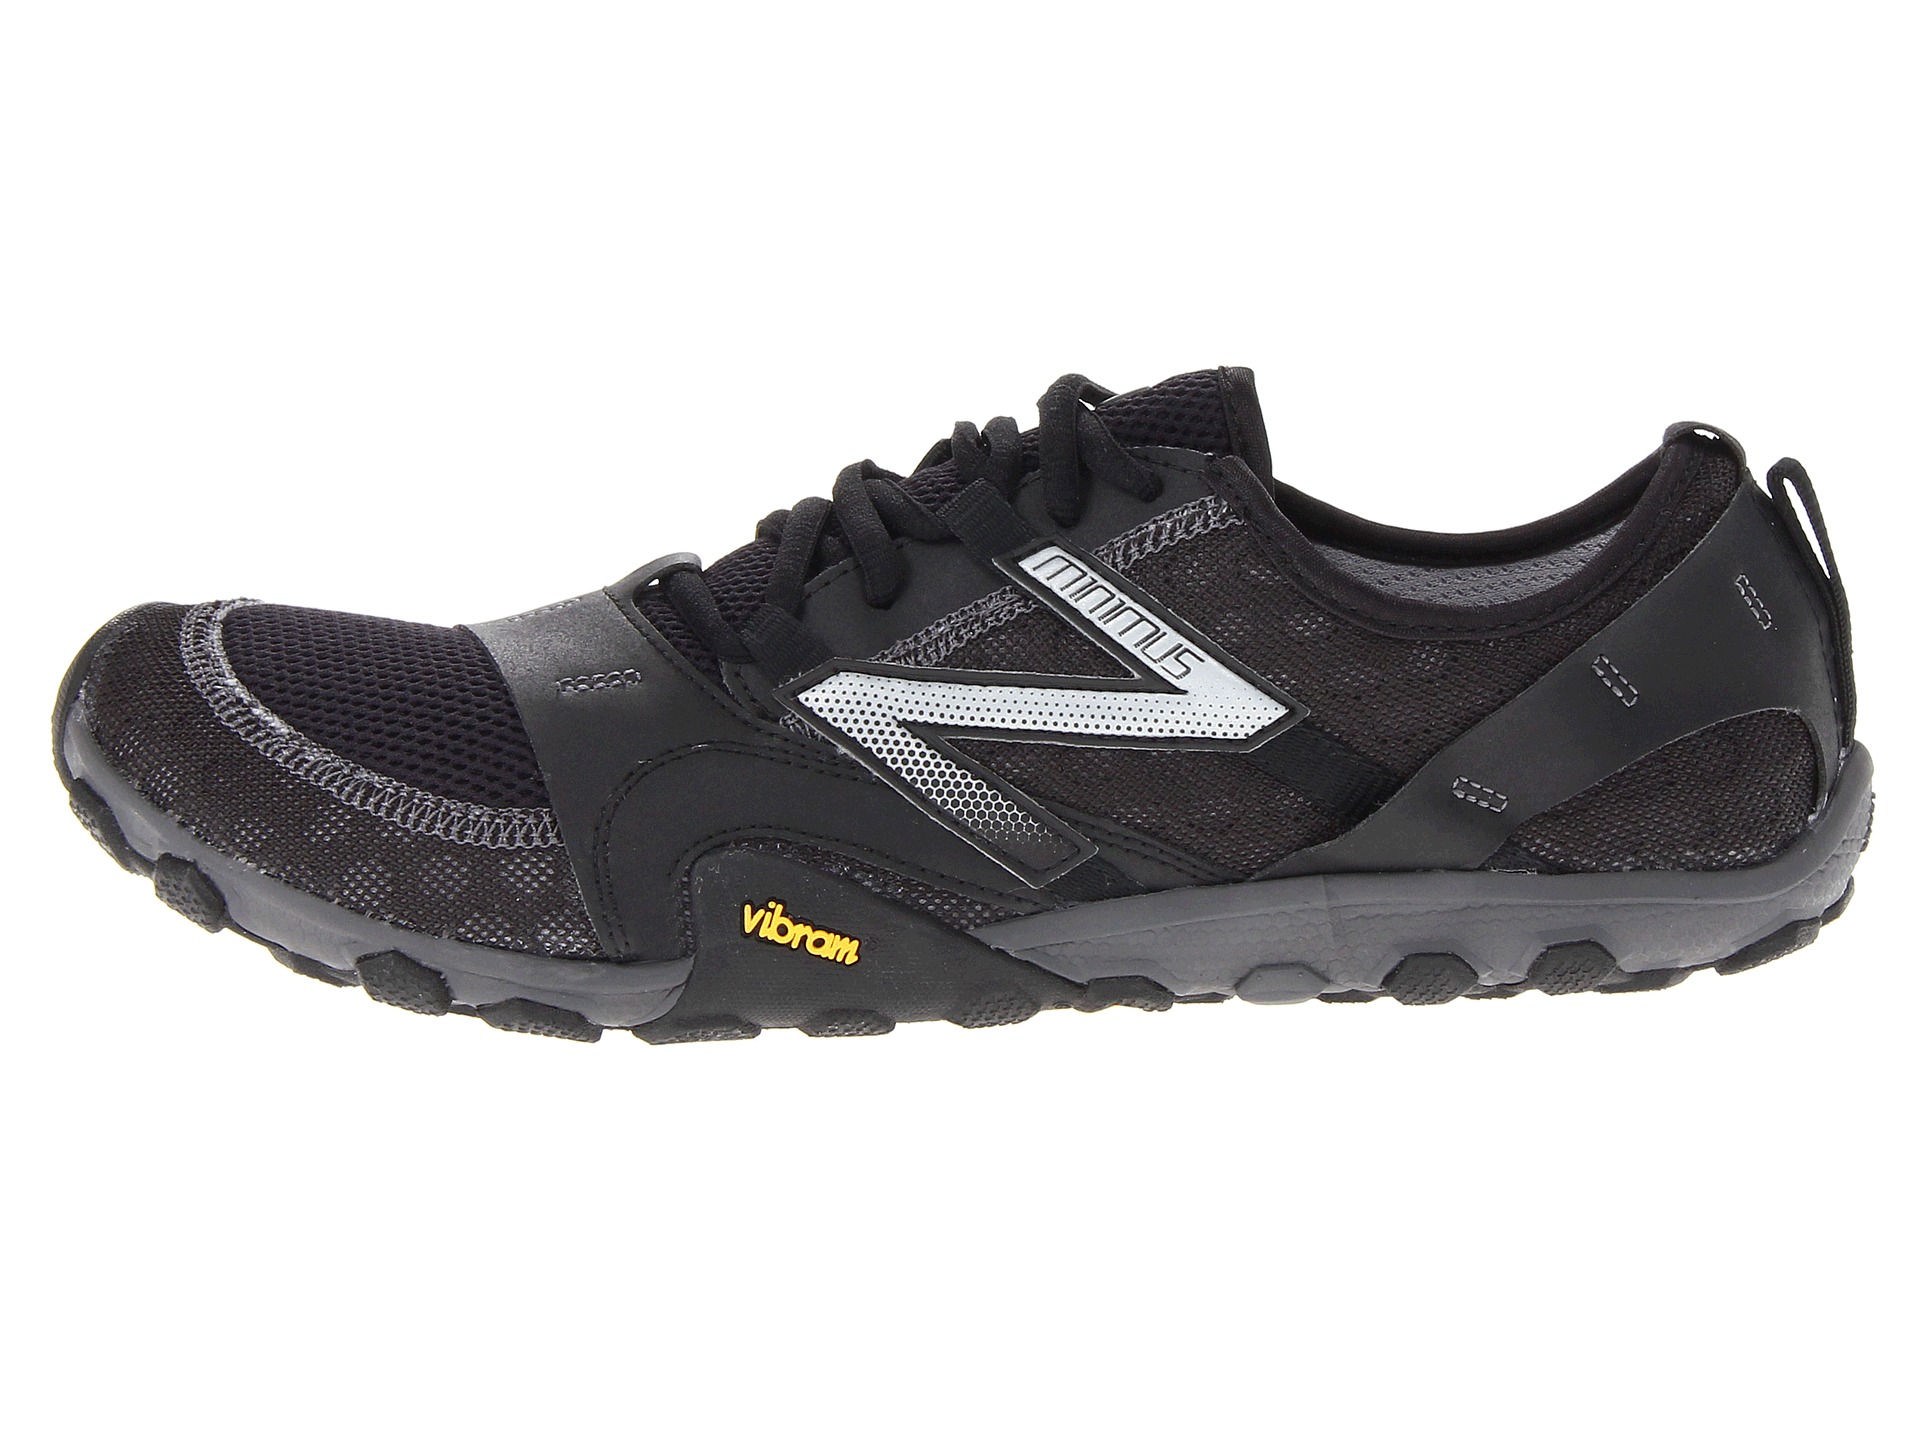 New Balance Mt10v2, Shoes, Men | Shipped Free at Zappos